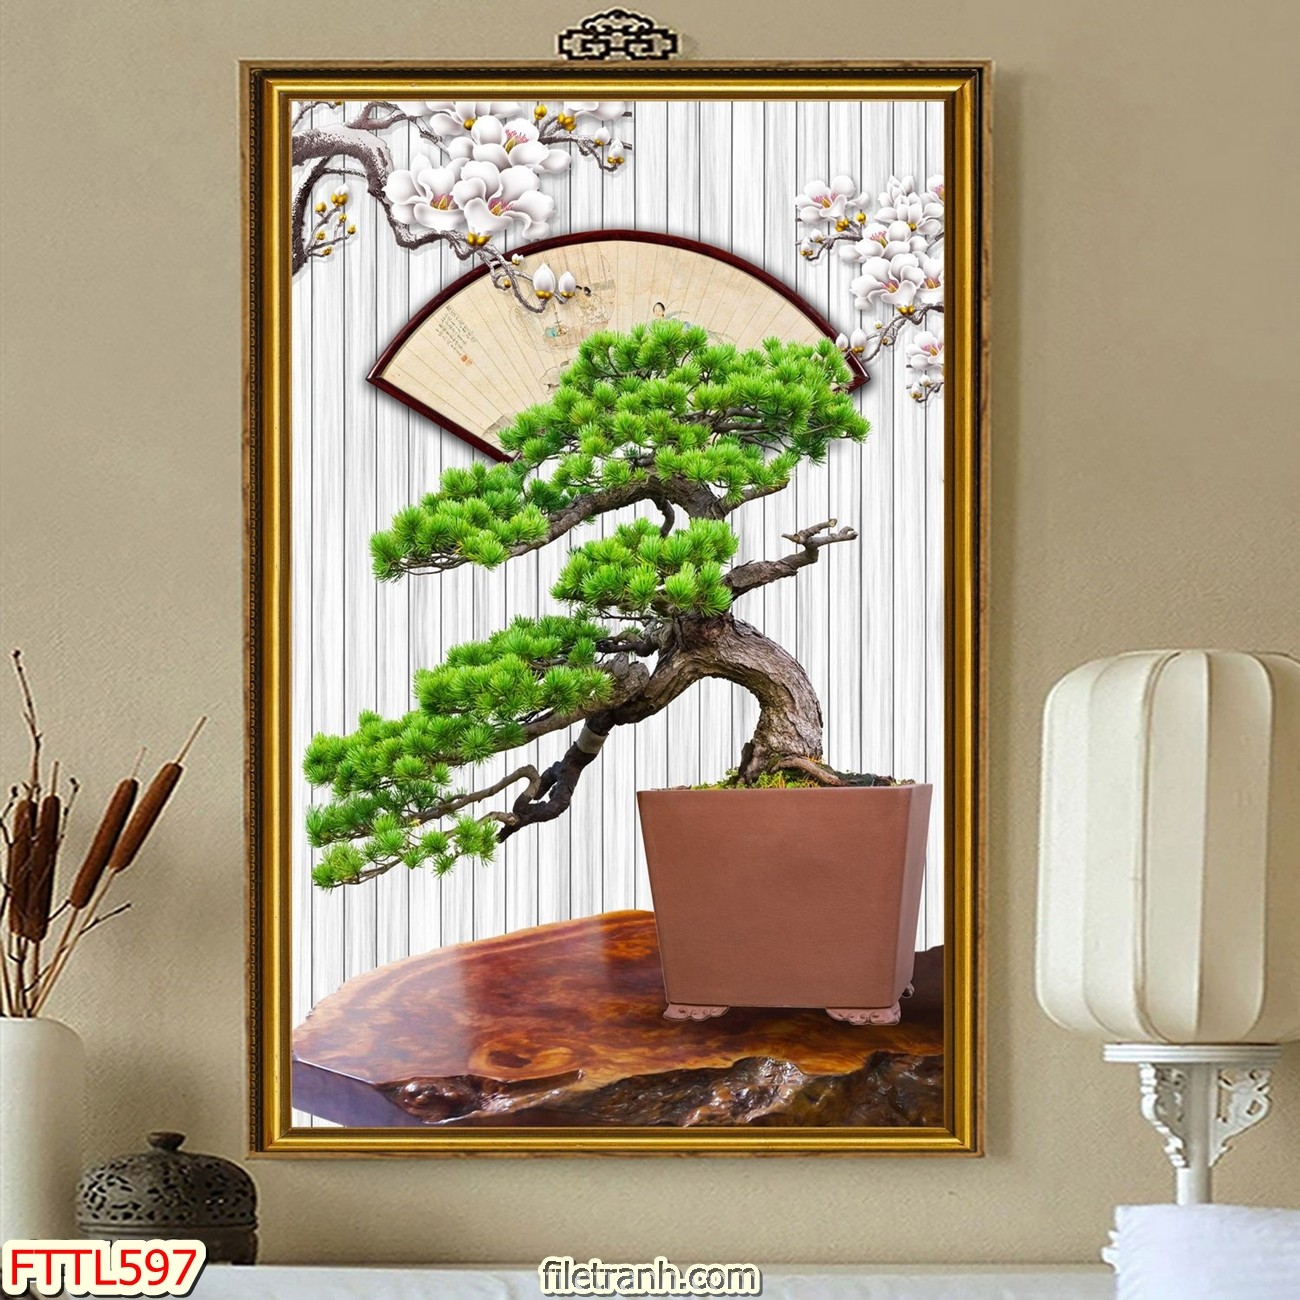 https://filetranh.com/file-tranh-chau-mai-bonsai/file-tranh-chau-mai-bonsai-fttl597.html